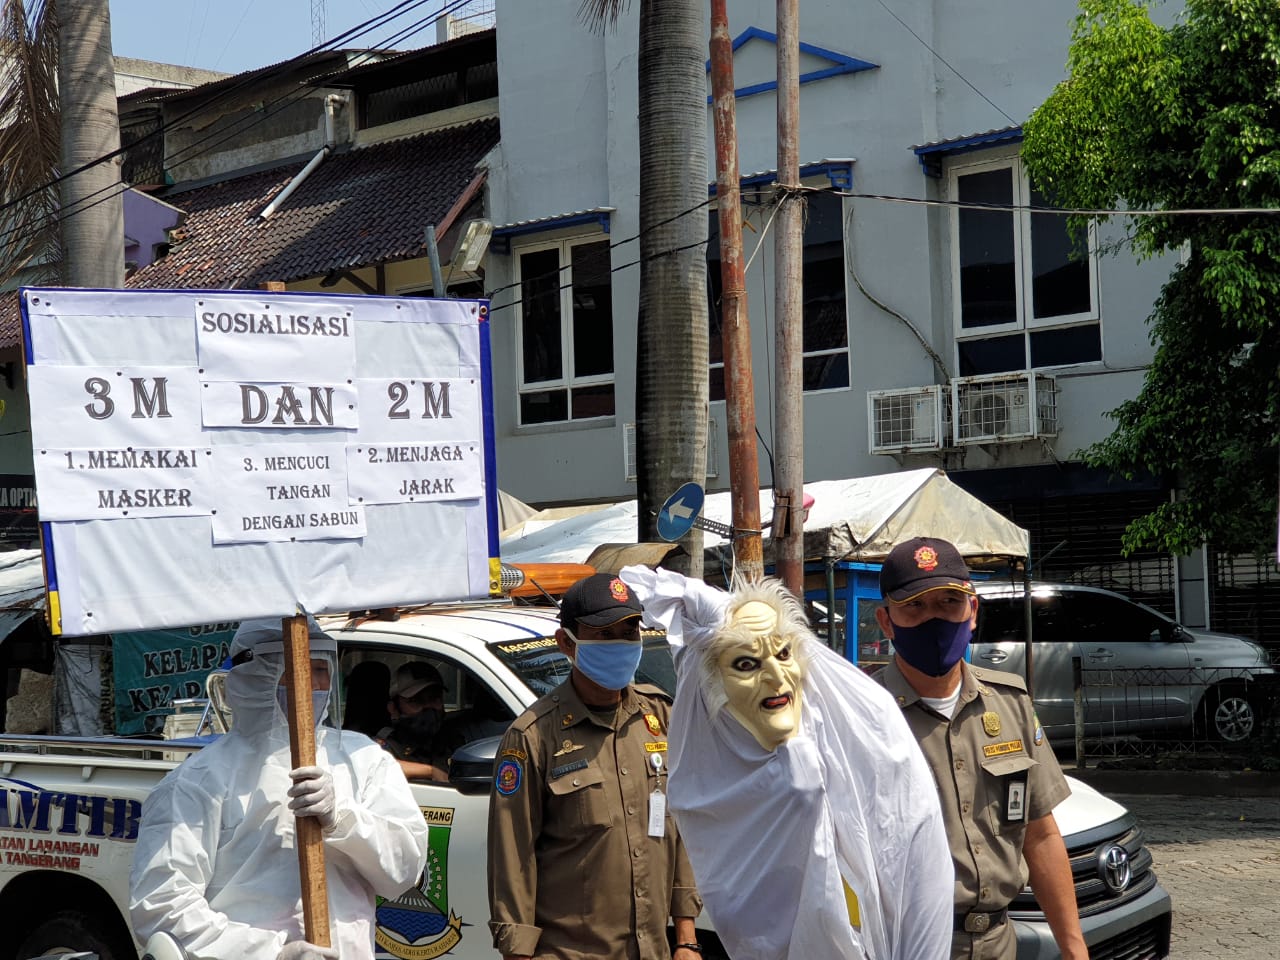 Petugas yang mengenakan pakaian menyerupai pocong diterjunkan untuk mendisiplinkan masyarakat Kota Tangerang di kawasan Pasar Kreo dan Cipadu, Kecamatan Larangan, Kota Tangerang, Rabu (16/9/2020).